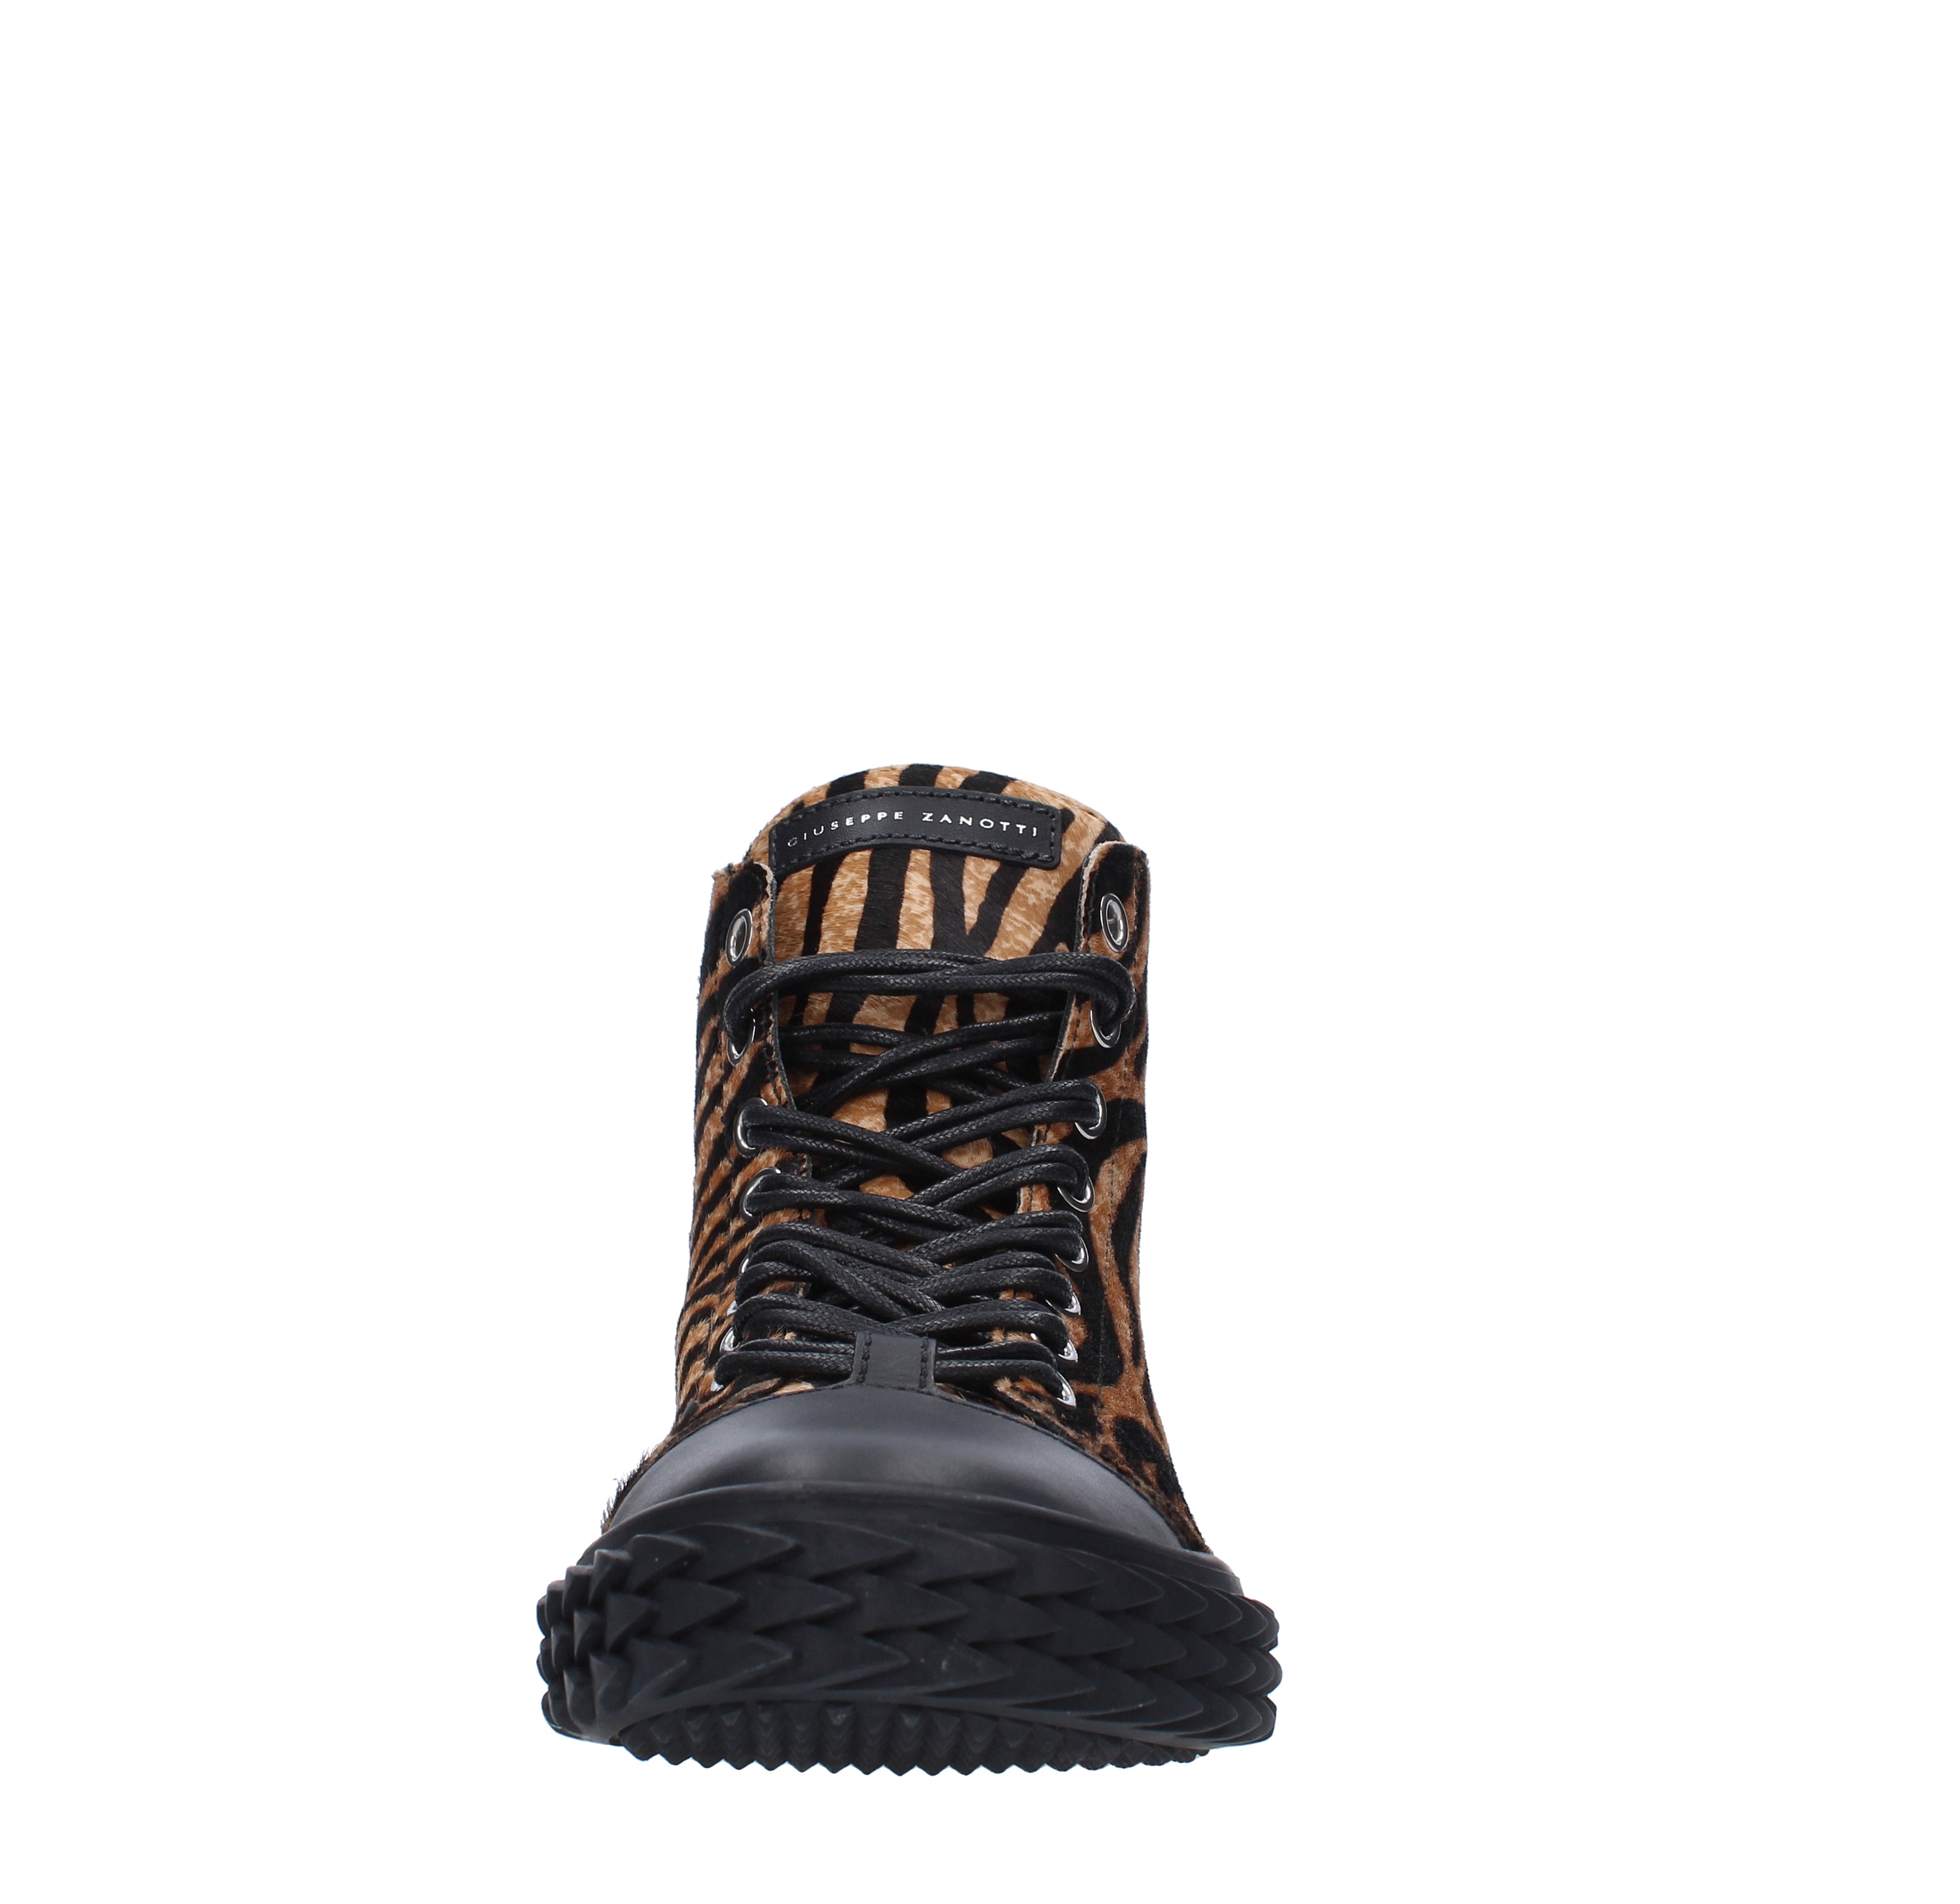 Leather and ponyskin sneakers GIUSEPPE ZANOTTI | RU90043NERO ZEBRATA